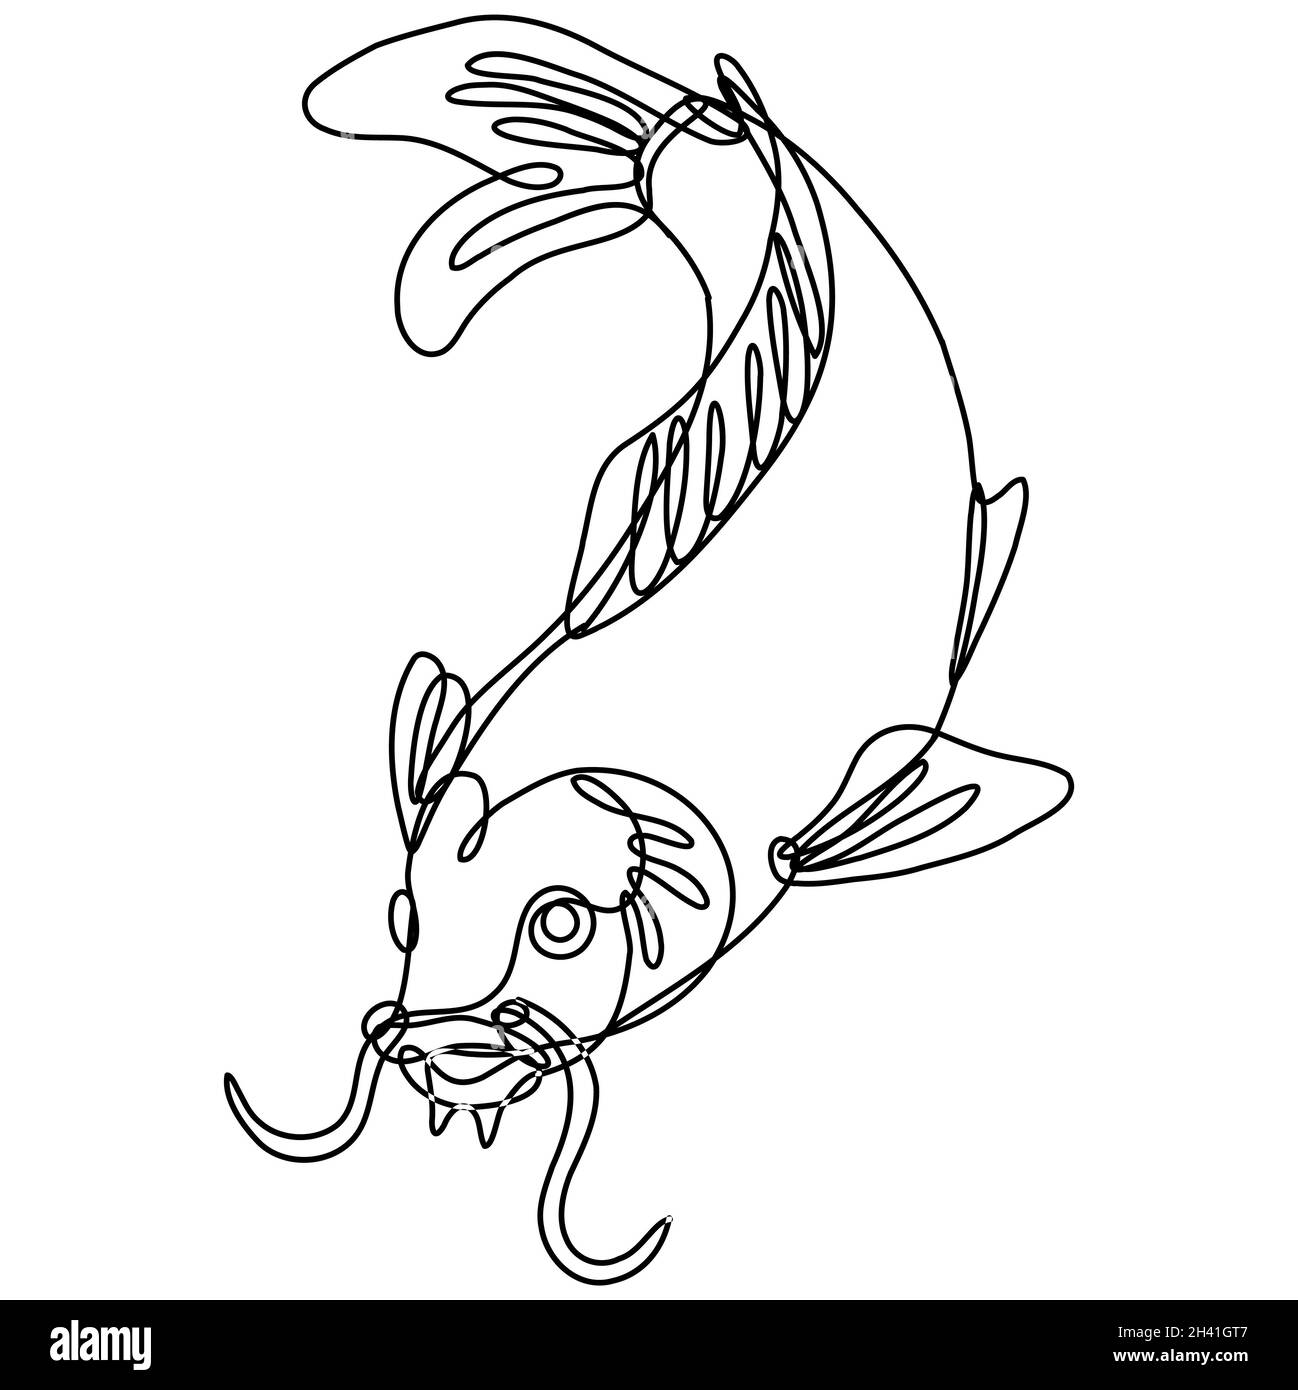 Nishikigoi Koi Carp Fish Diving Down Continuous Line Drawing Stock Photo